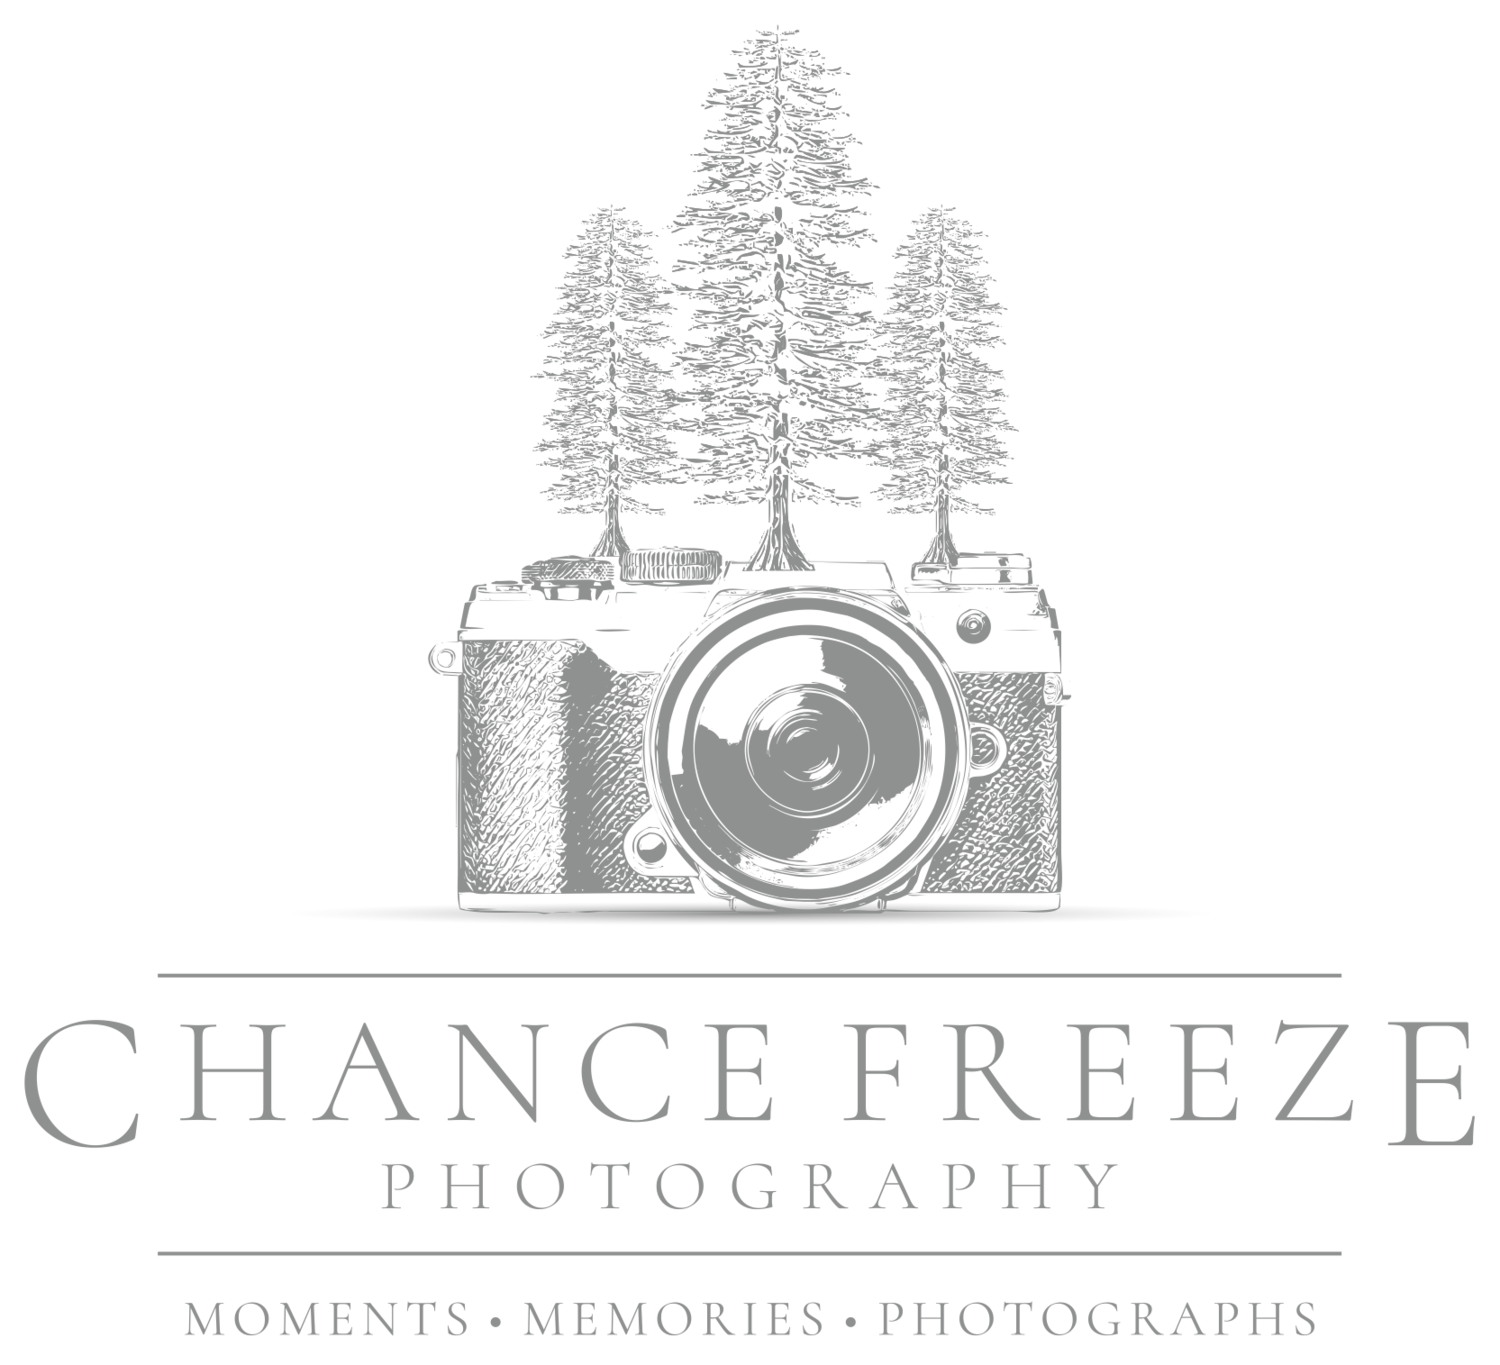 CHANCE FREEZE PHOTOGRAPHY